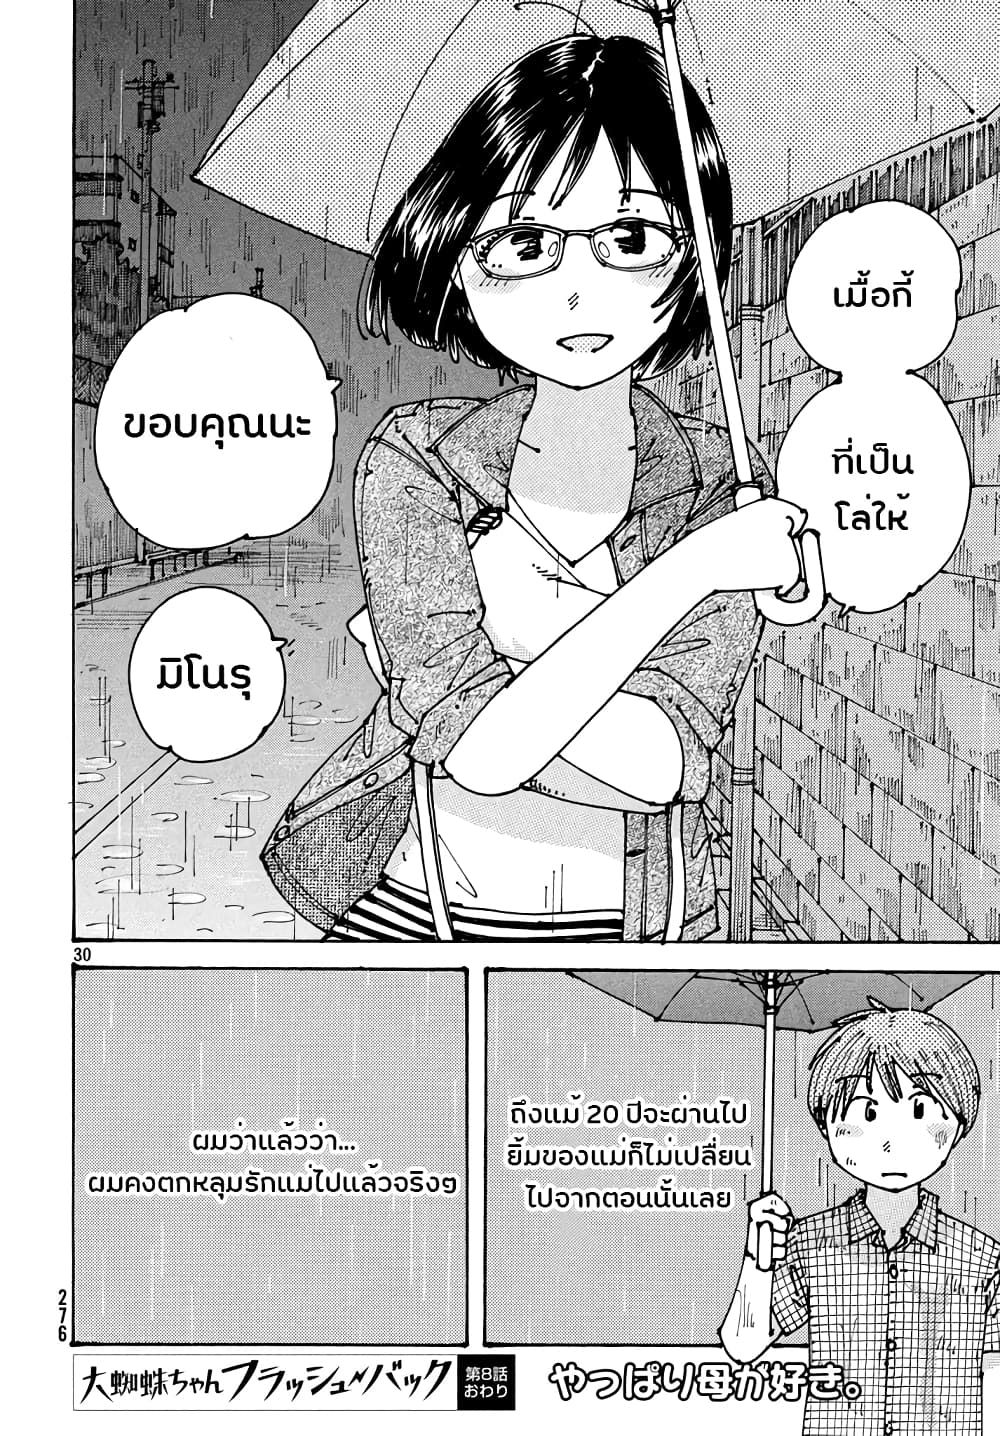 Ookumo-chan Flashback 8-แม่ลูกคุยกันแบบเปิดอก สบายๆอย่างงั้นรึ